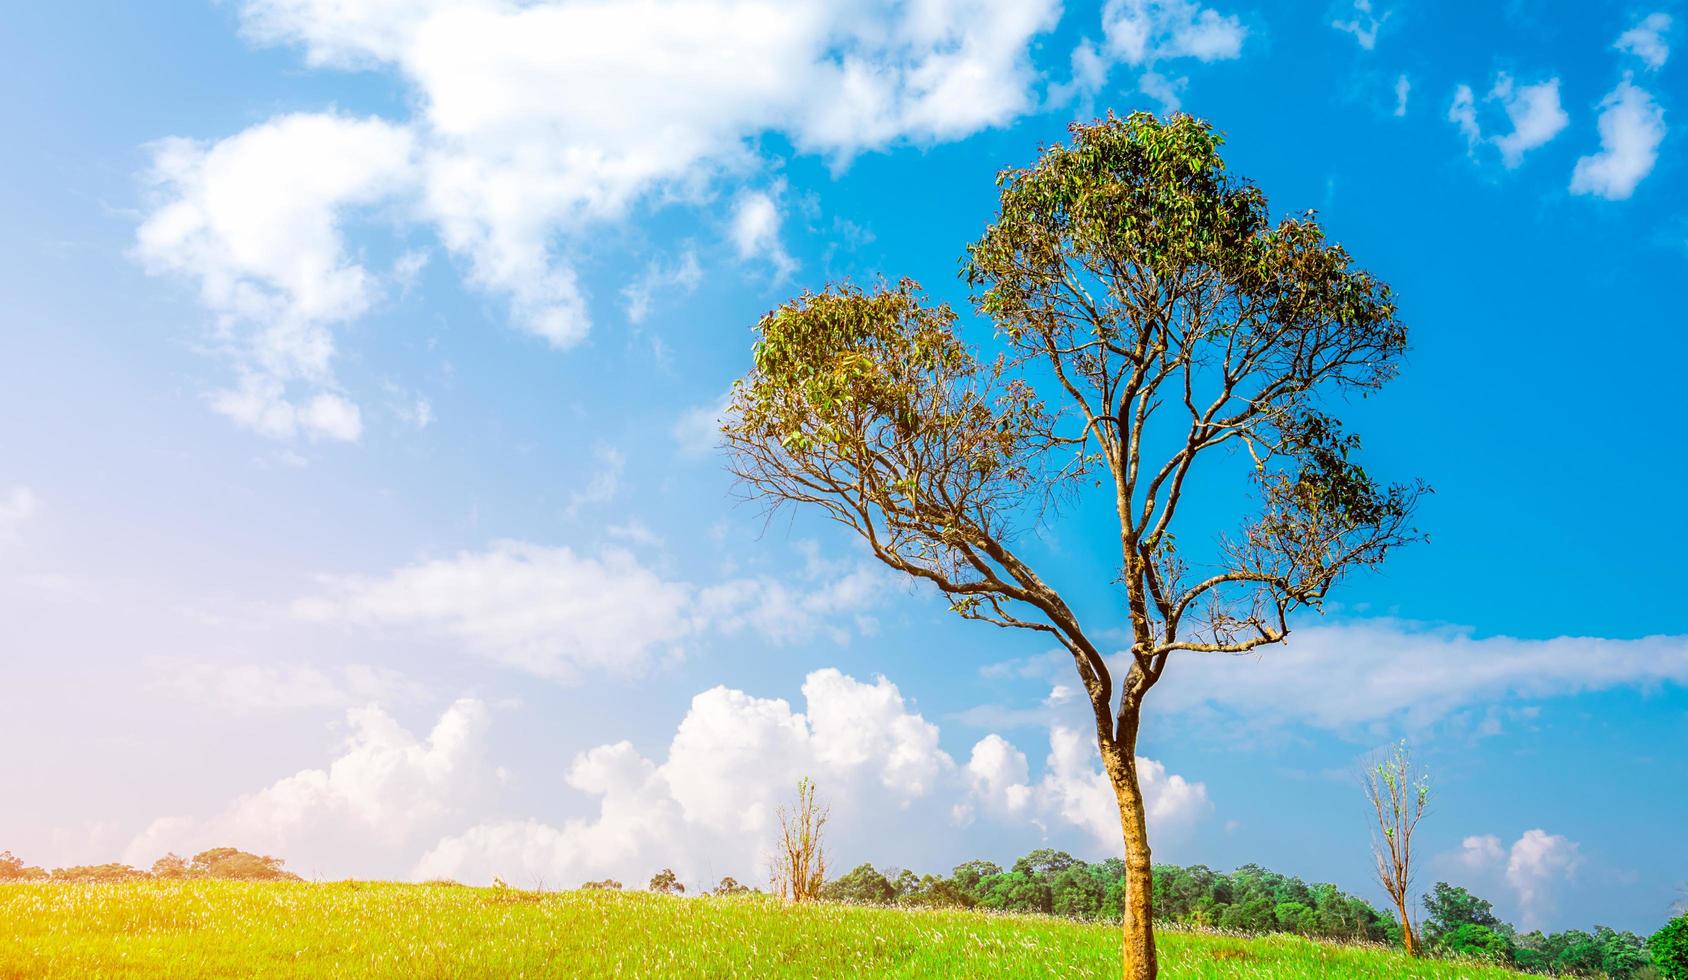 groene boom met mooi takkenpatroon op heuvel en groen grasveld met witte bloemen en blauwe lucht en witte cumuluswolken als achtergrond op mooie zonnige dag. natuur samenstelling. foto